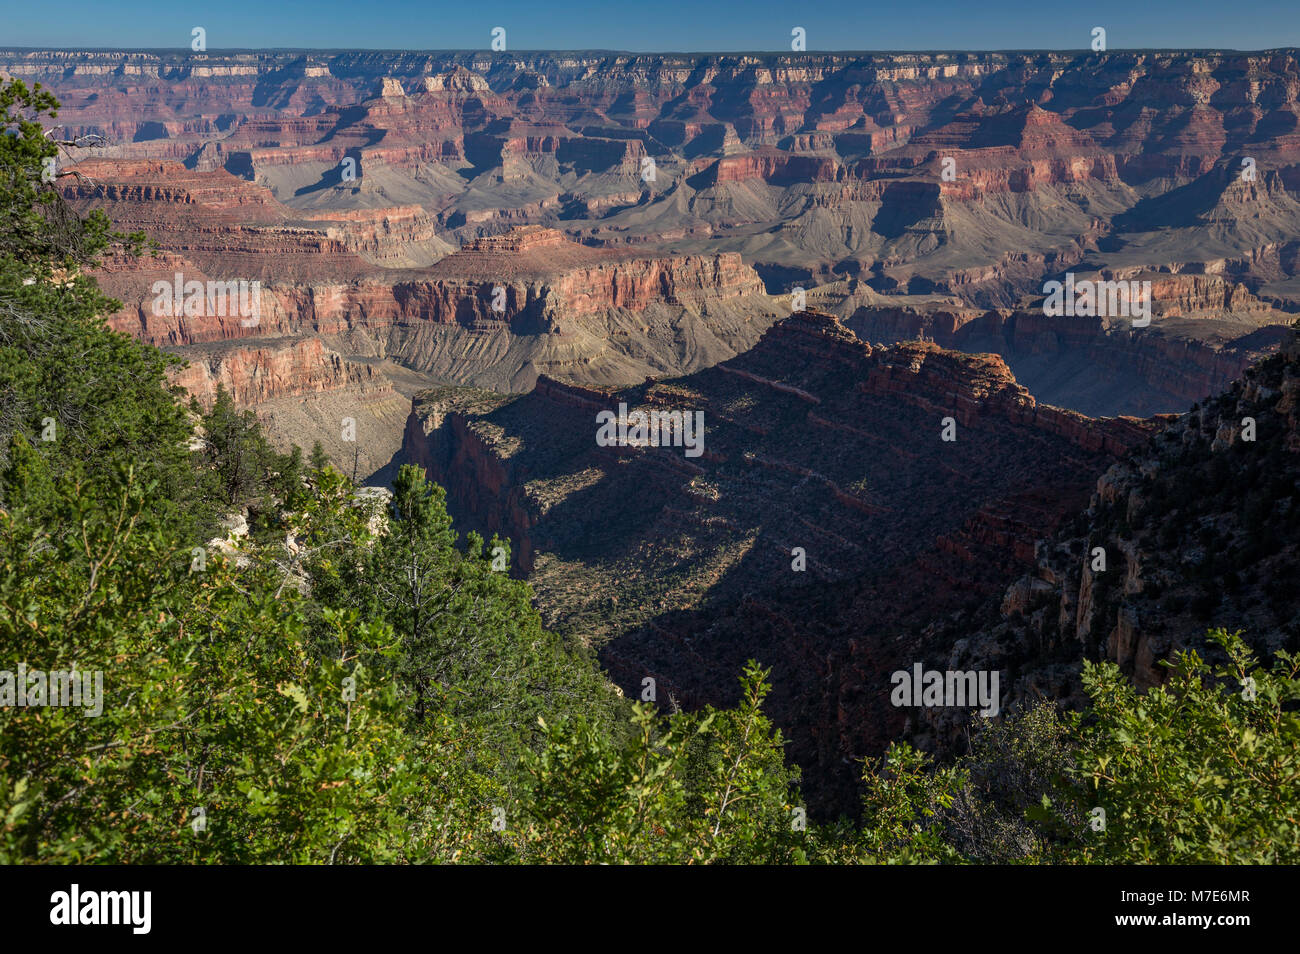 Grand Canyon de Desert View Drive, Arizona, USA Banque D'Images